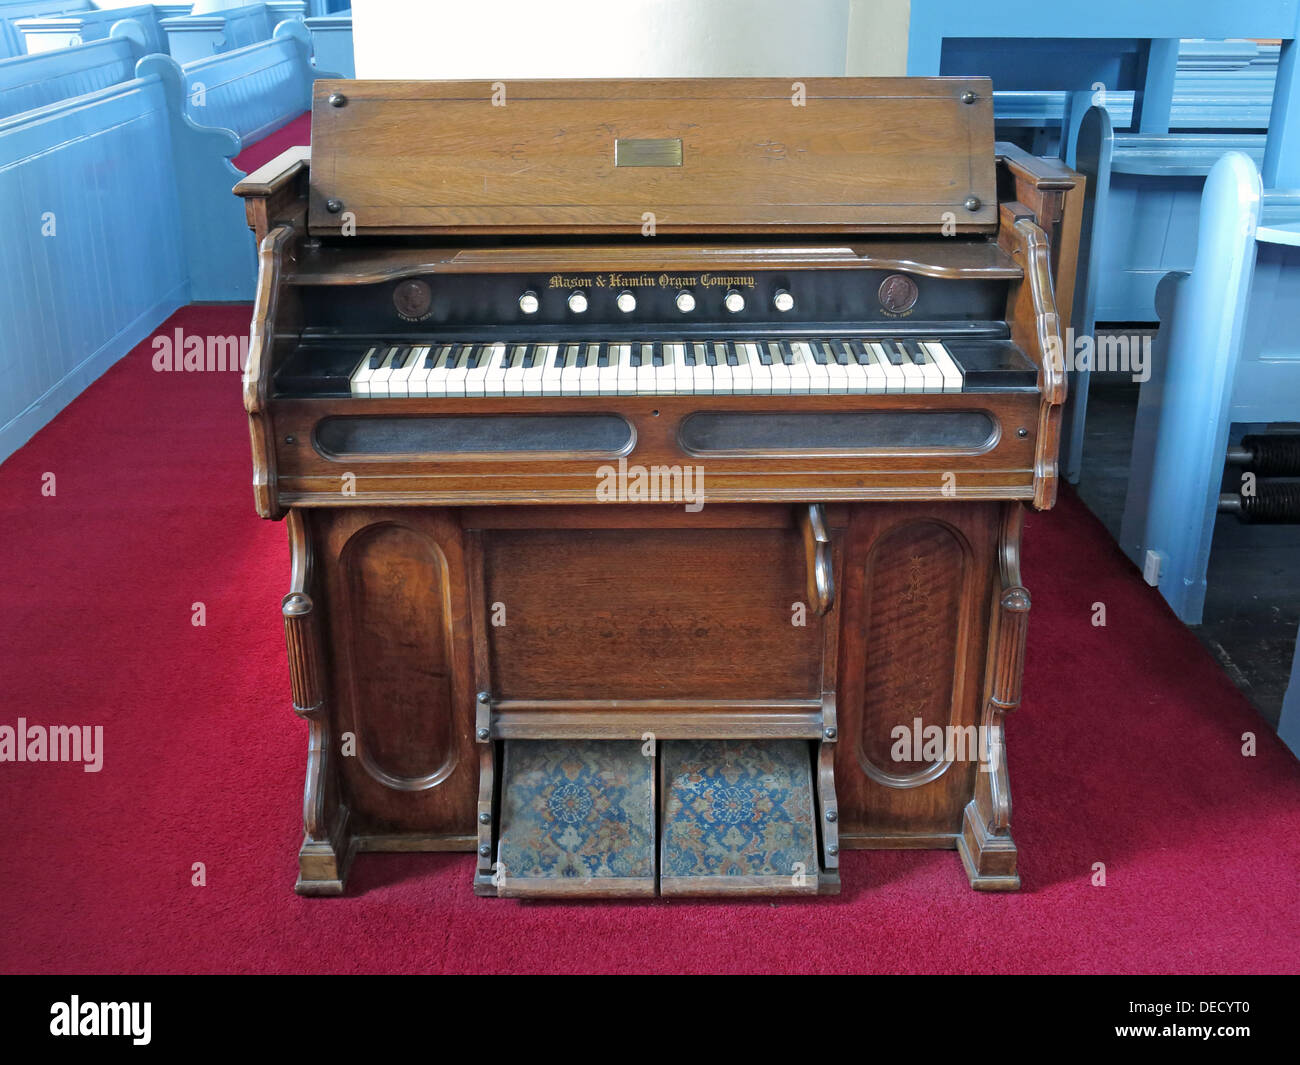 Mason Hamlin Orgel in Edinburgh Canongate Kirk, Scotland, UK Stockfoto